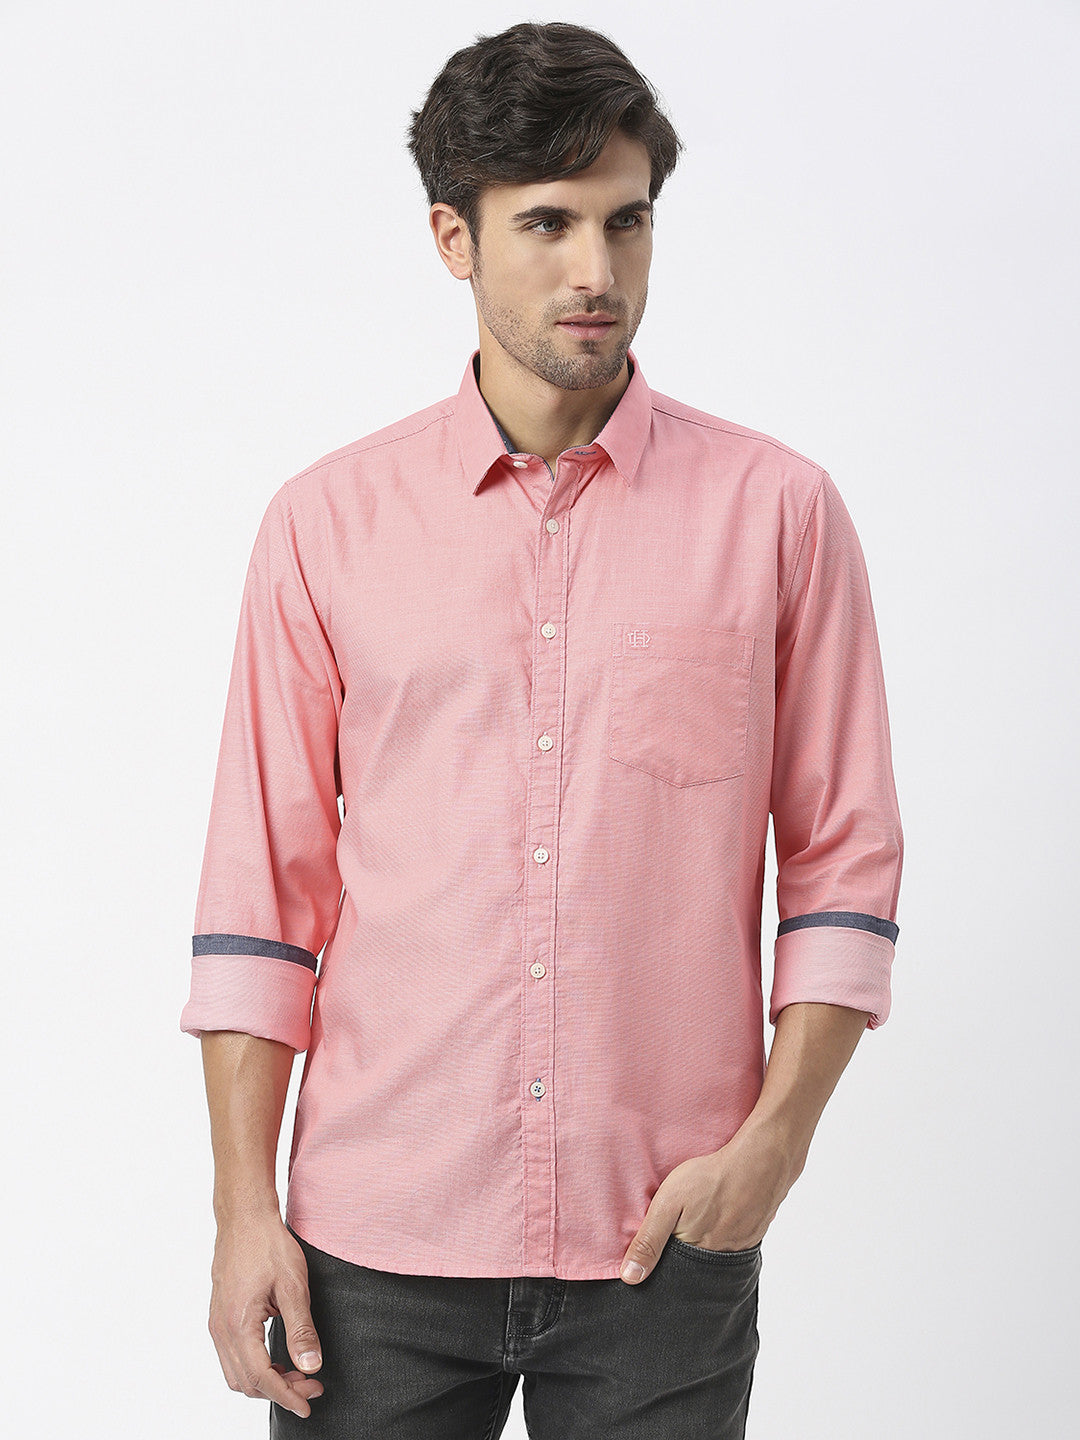 Pink Dobby Plain Shirt With Pocket